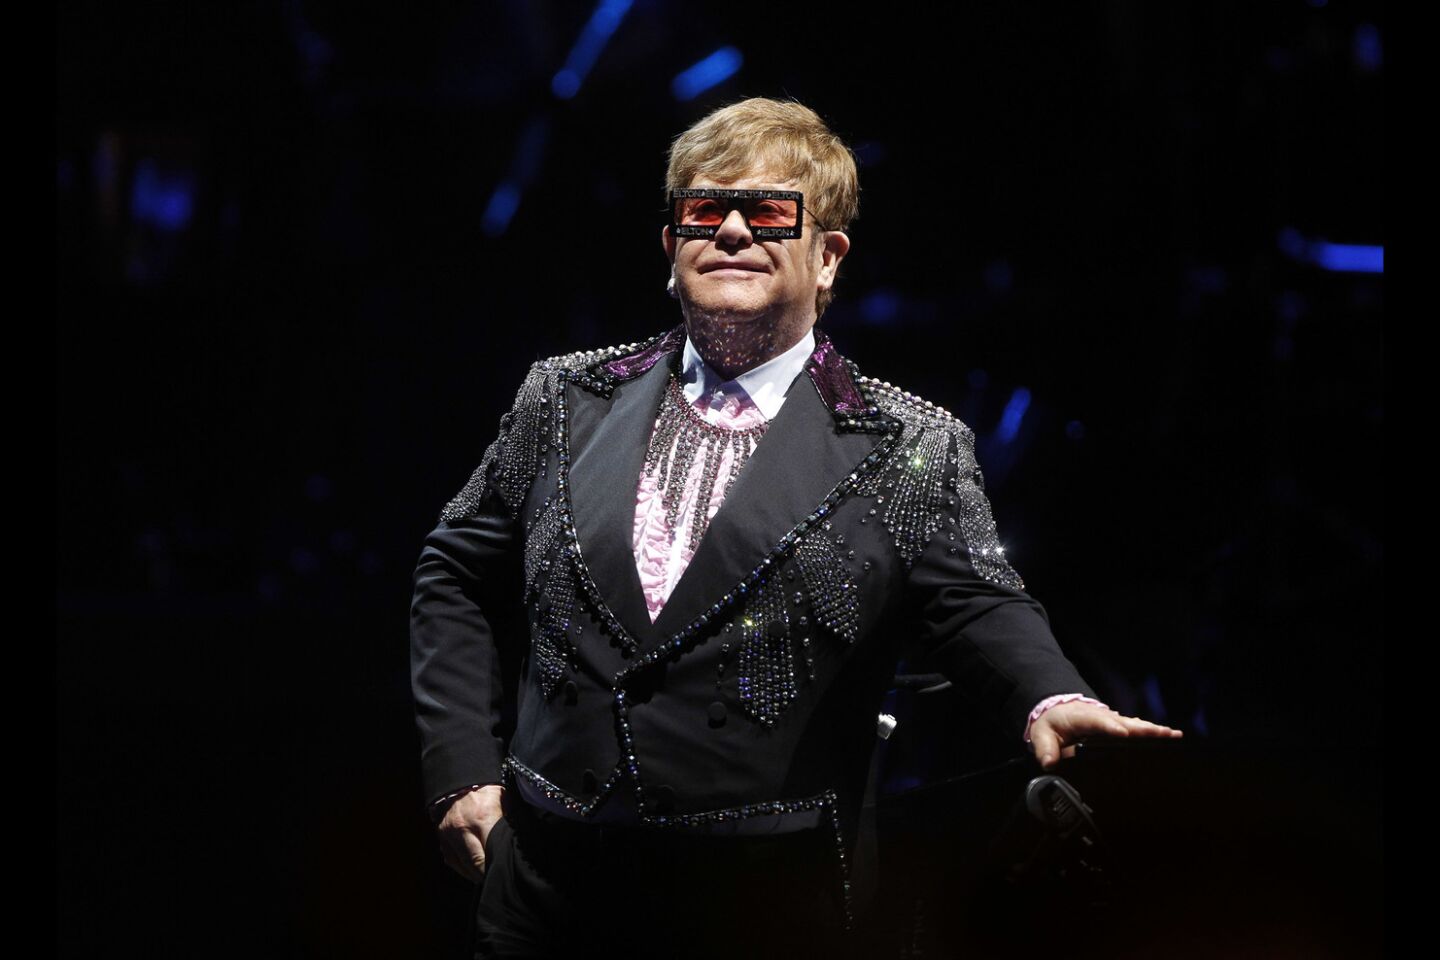 Elton John's final concert in San Diego